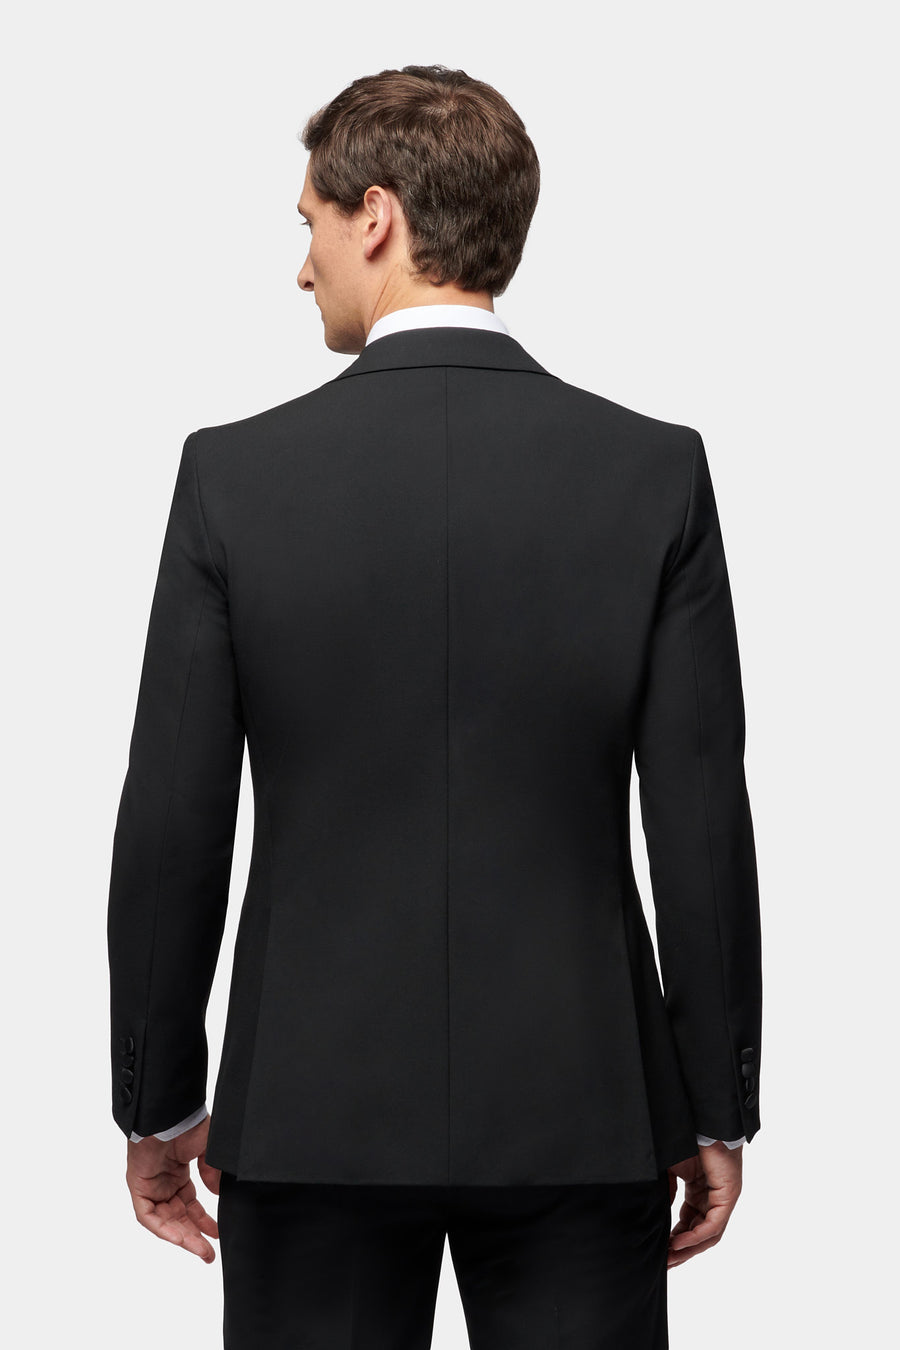 Peckham Rye Classic Tuxedo Jacket in Black